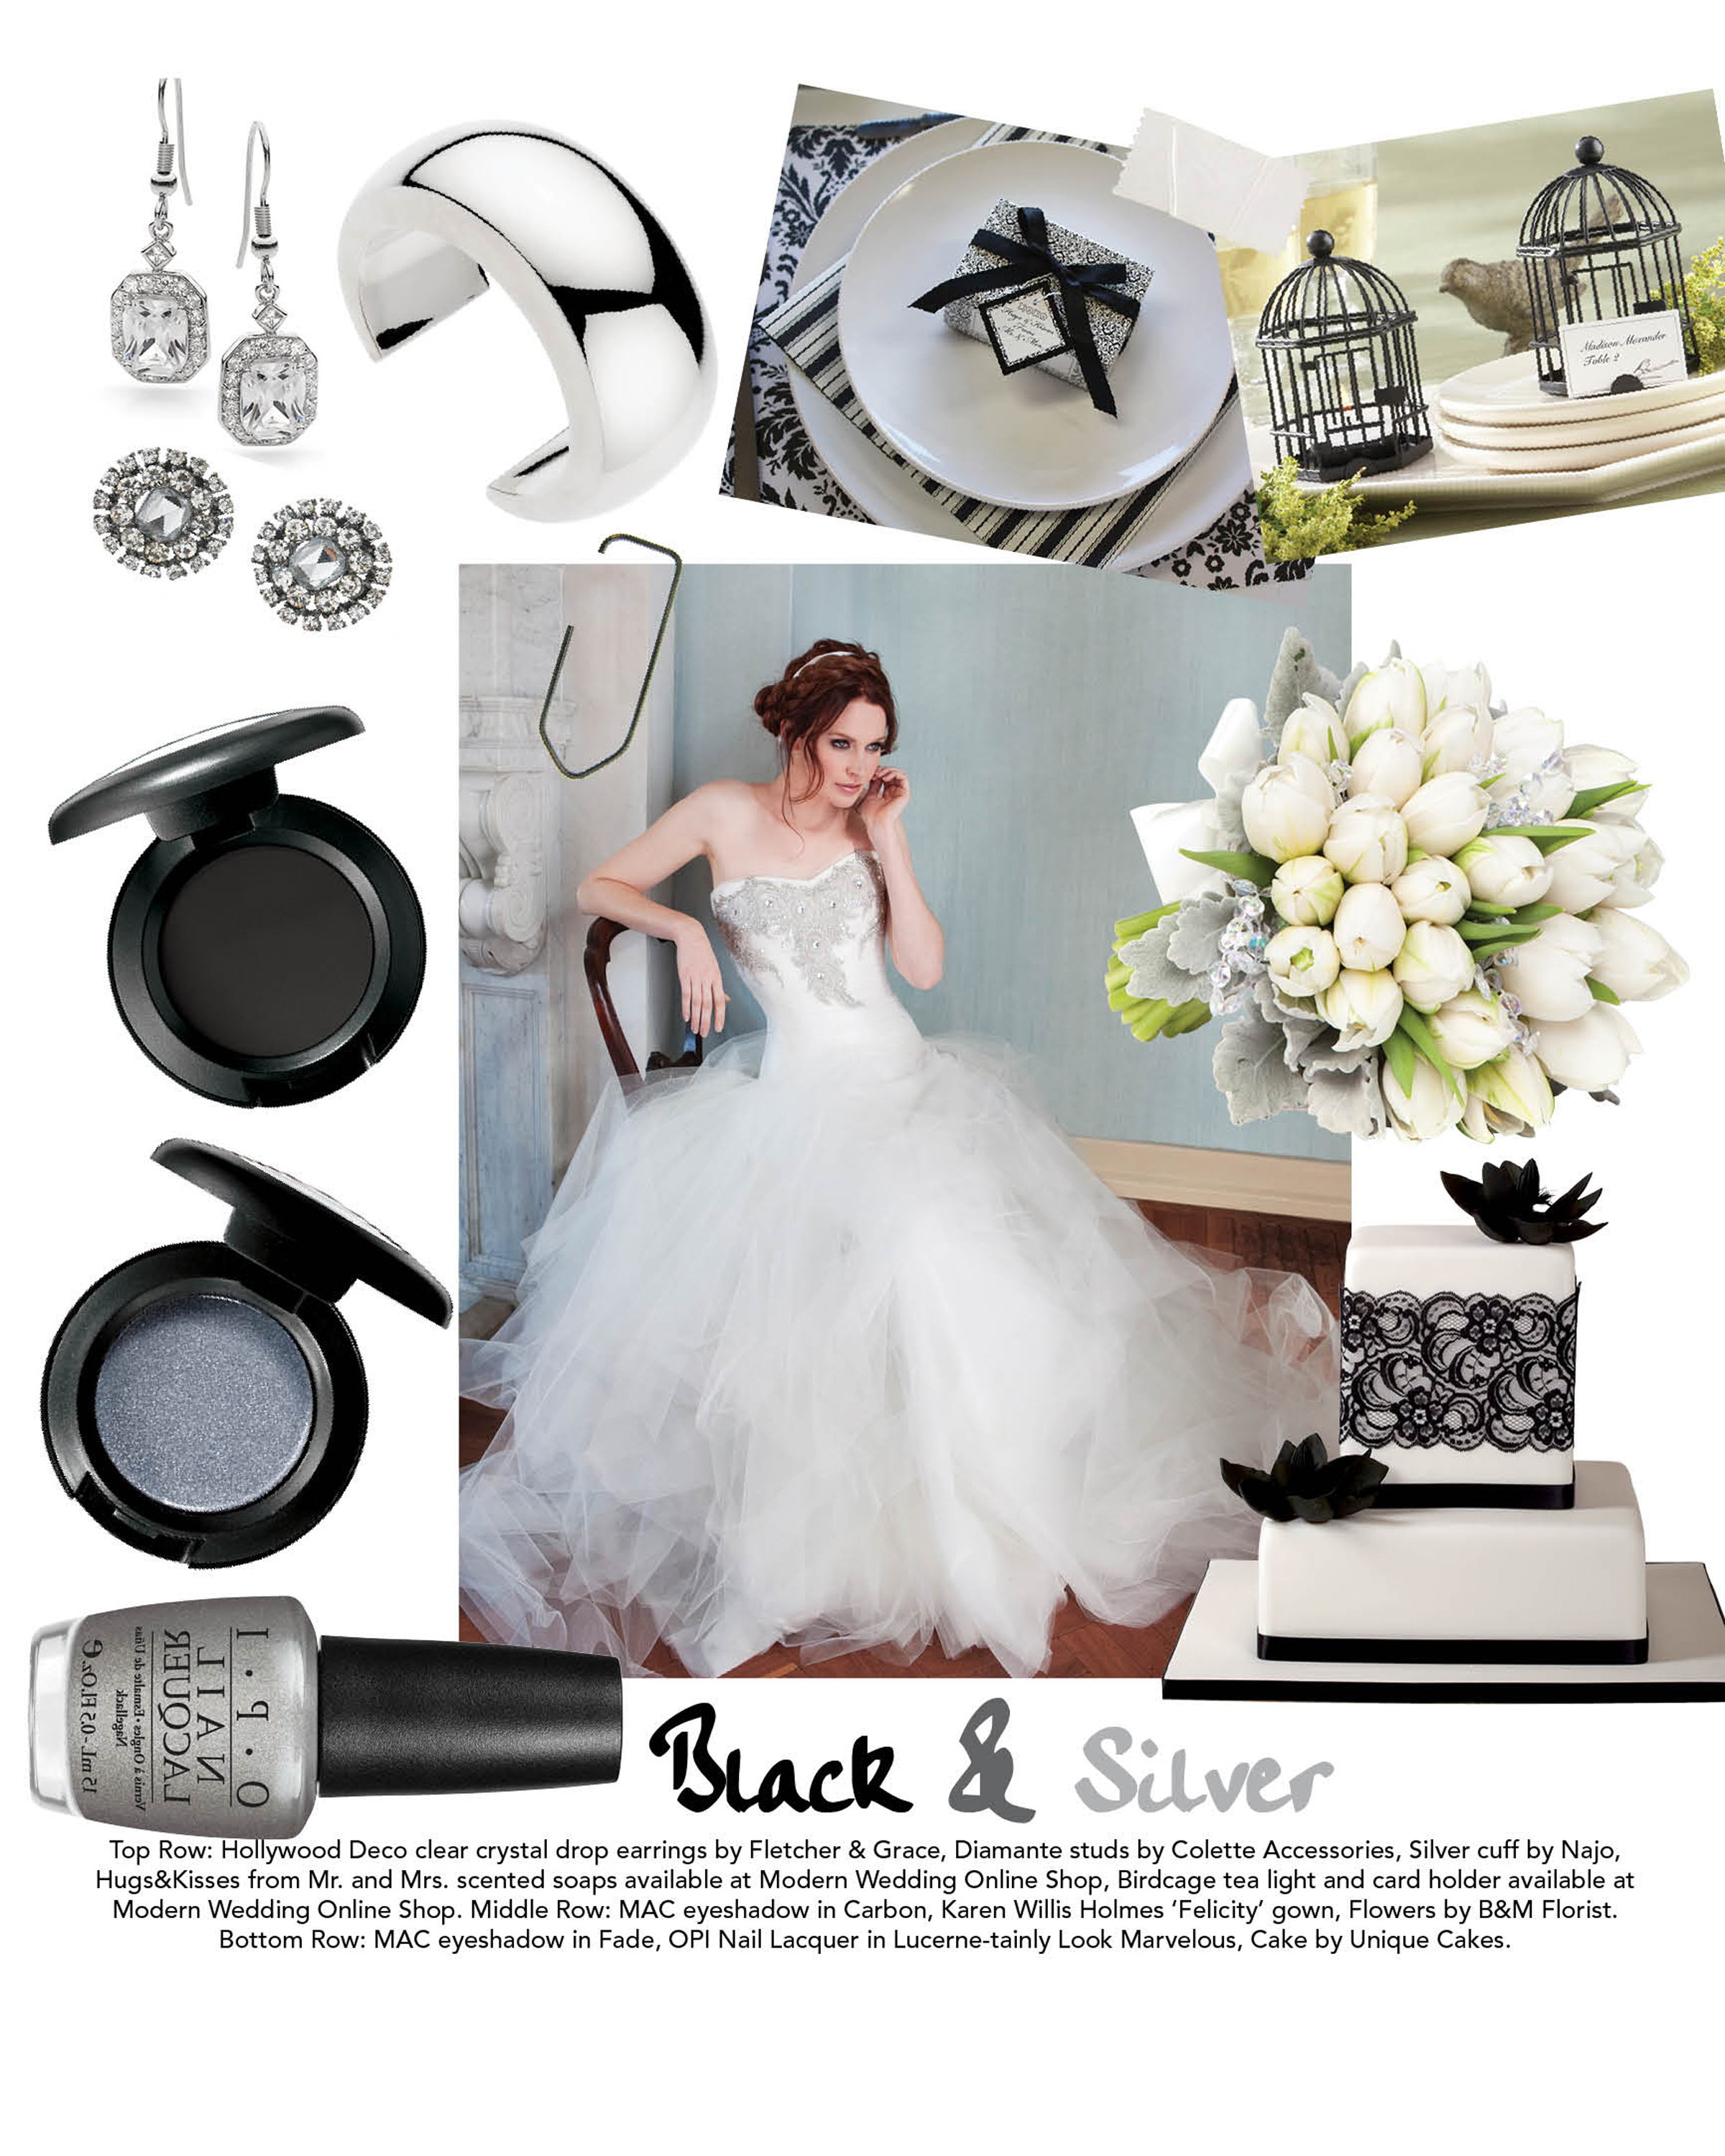 Black and Silver Wedding Inspiration - Modern Wedding